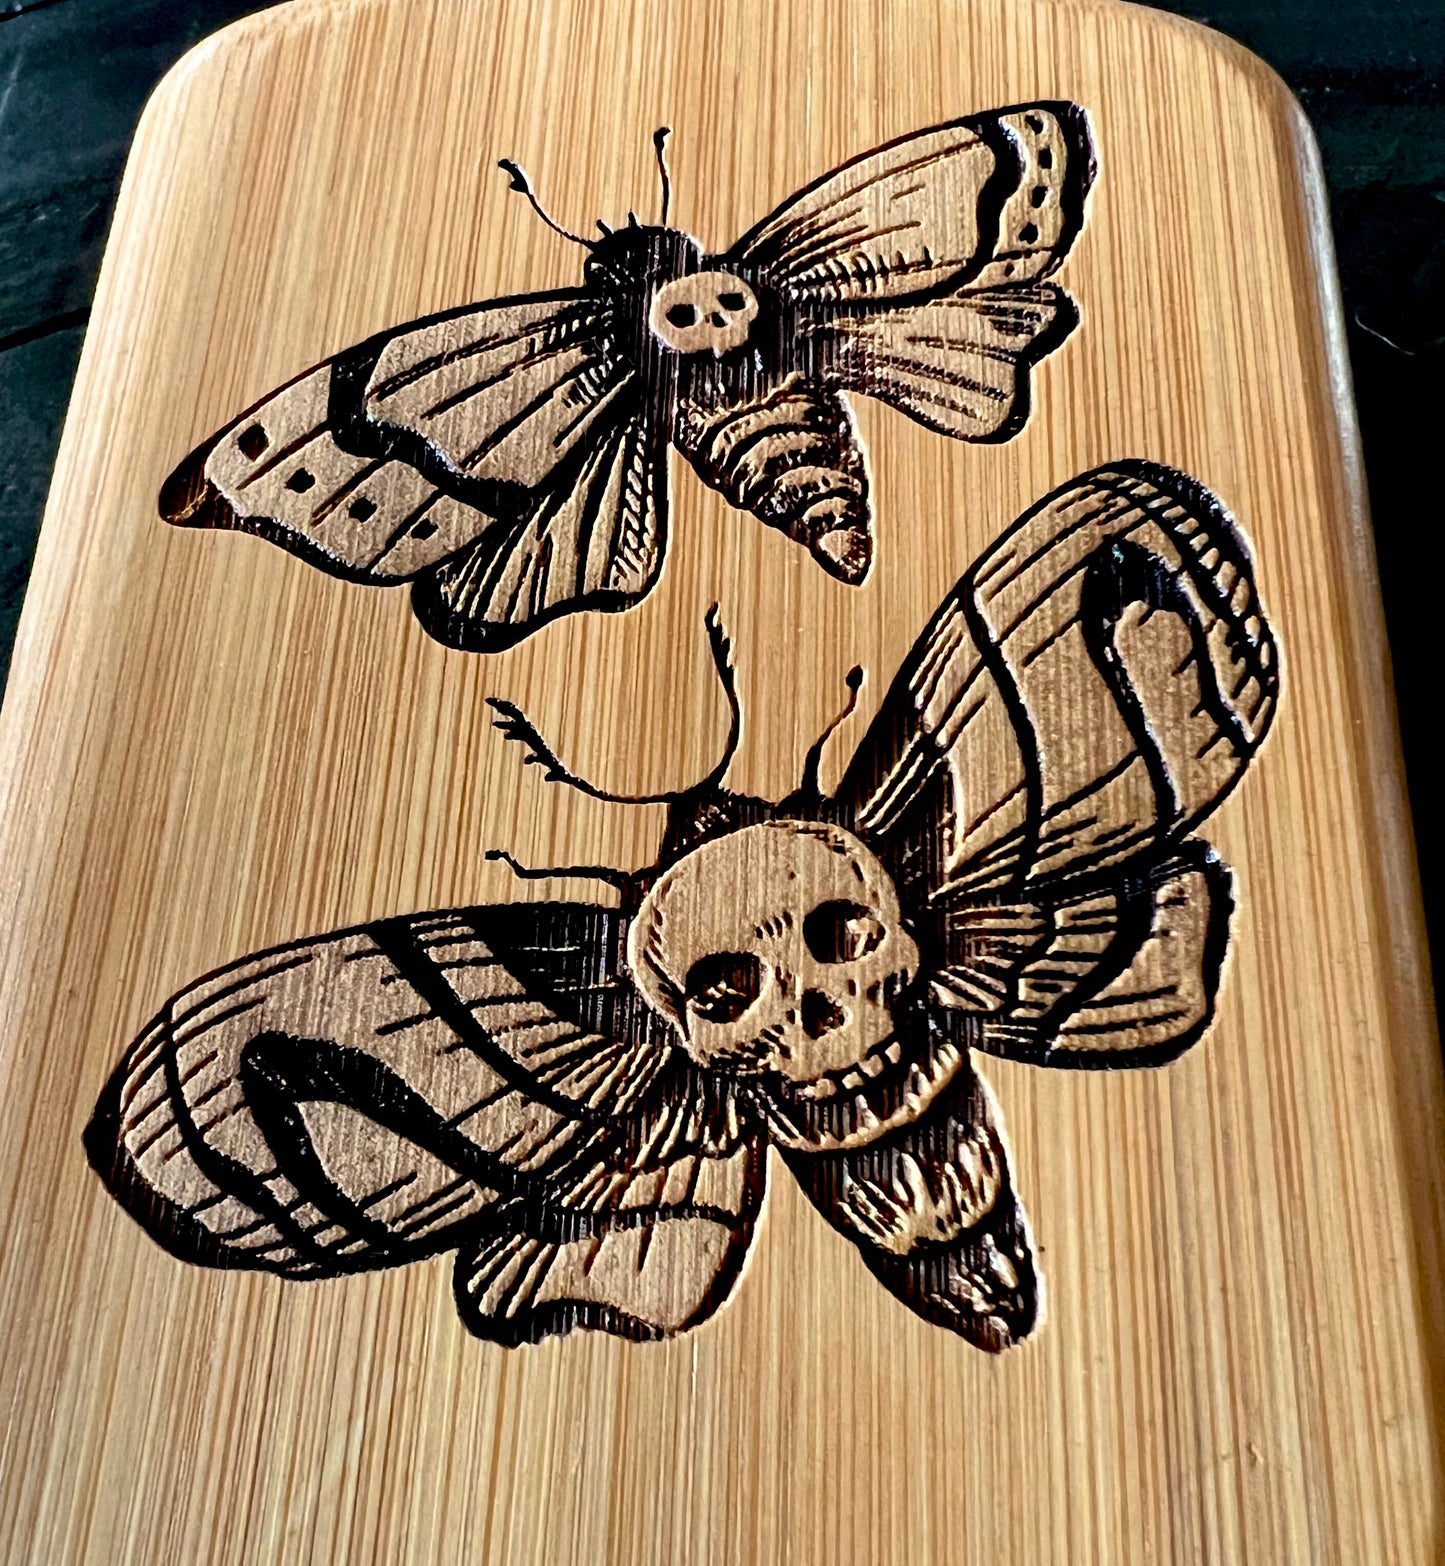 Hairbrush - Death Moths Engraved on Bamboo